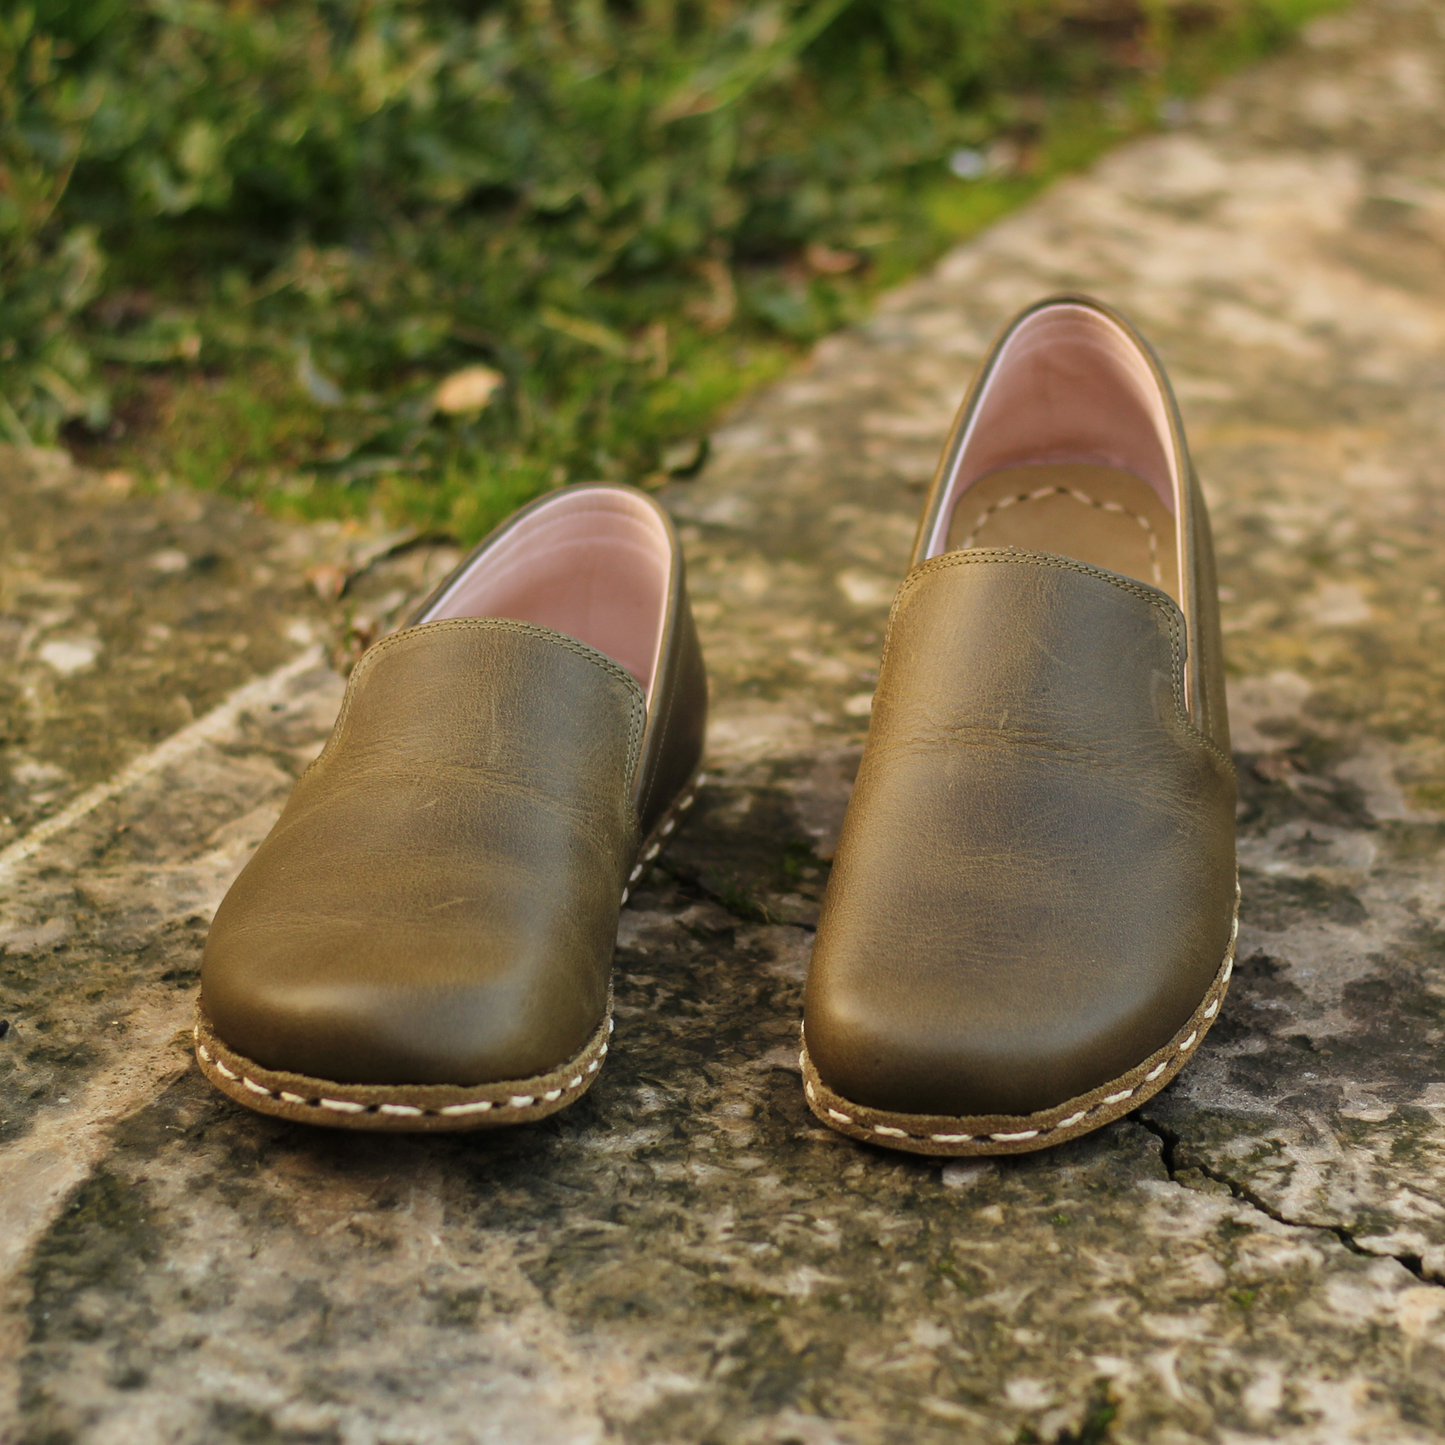 Handmade Leather Loafer Barefoot Shoes for Men - Turkish Yemeni Style